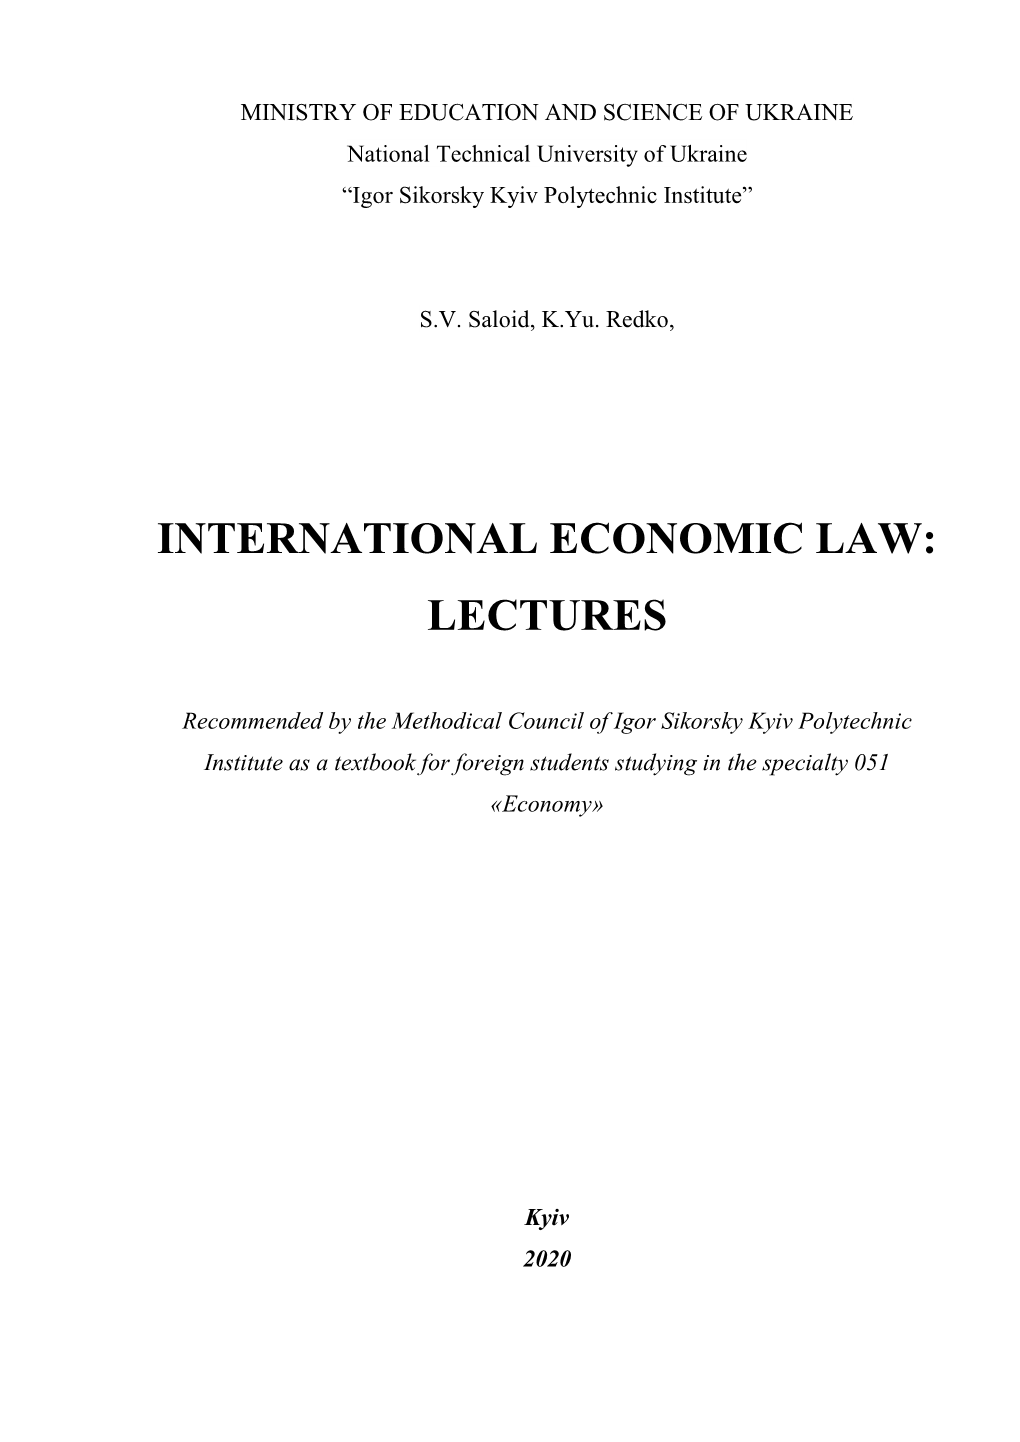 International Economic Law: Lectures